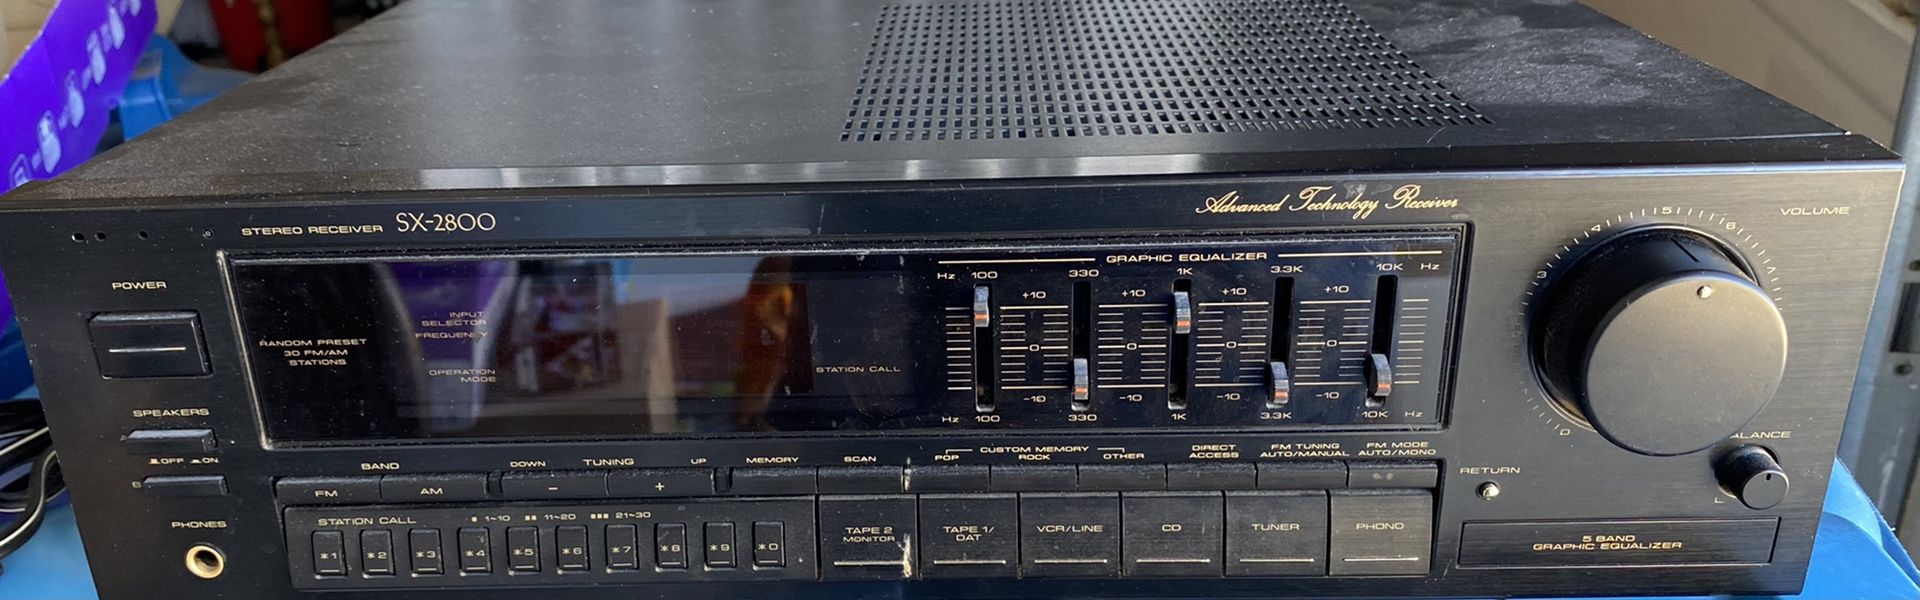 Pioneer SX-2800 Stereo